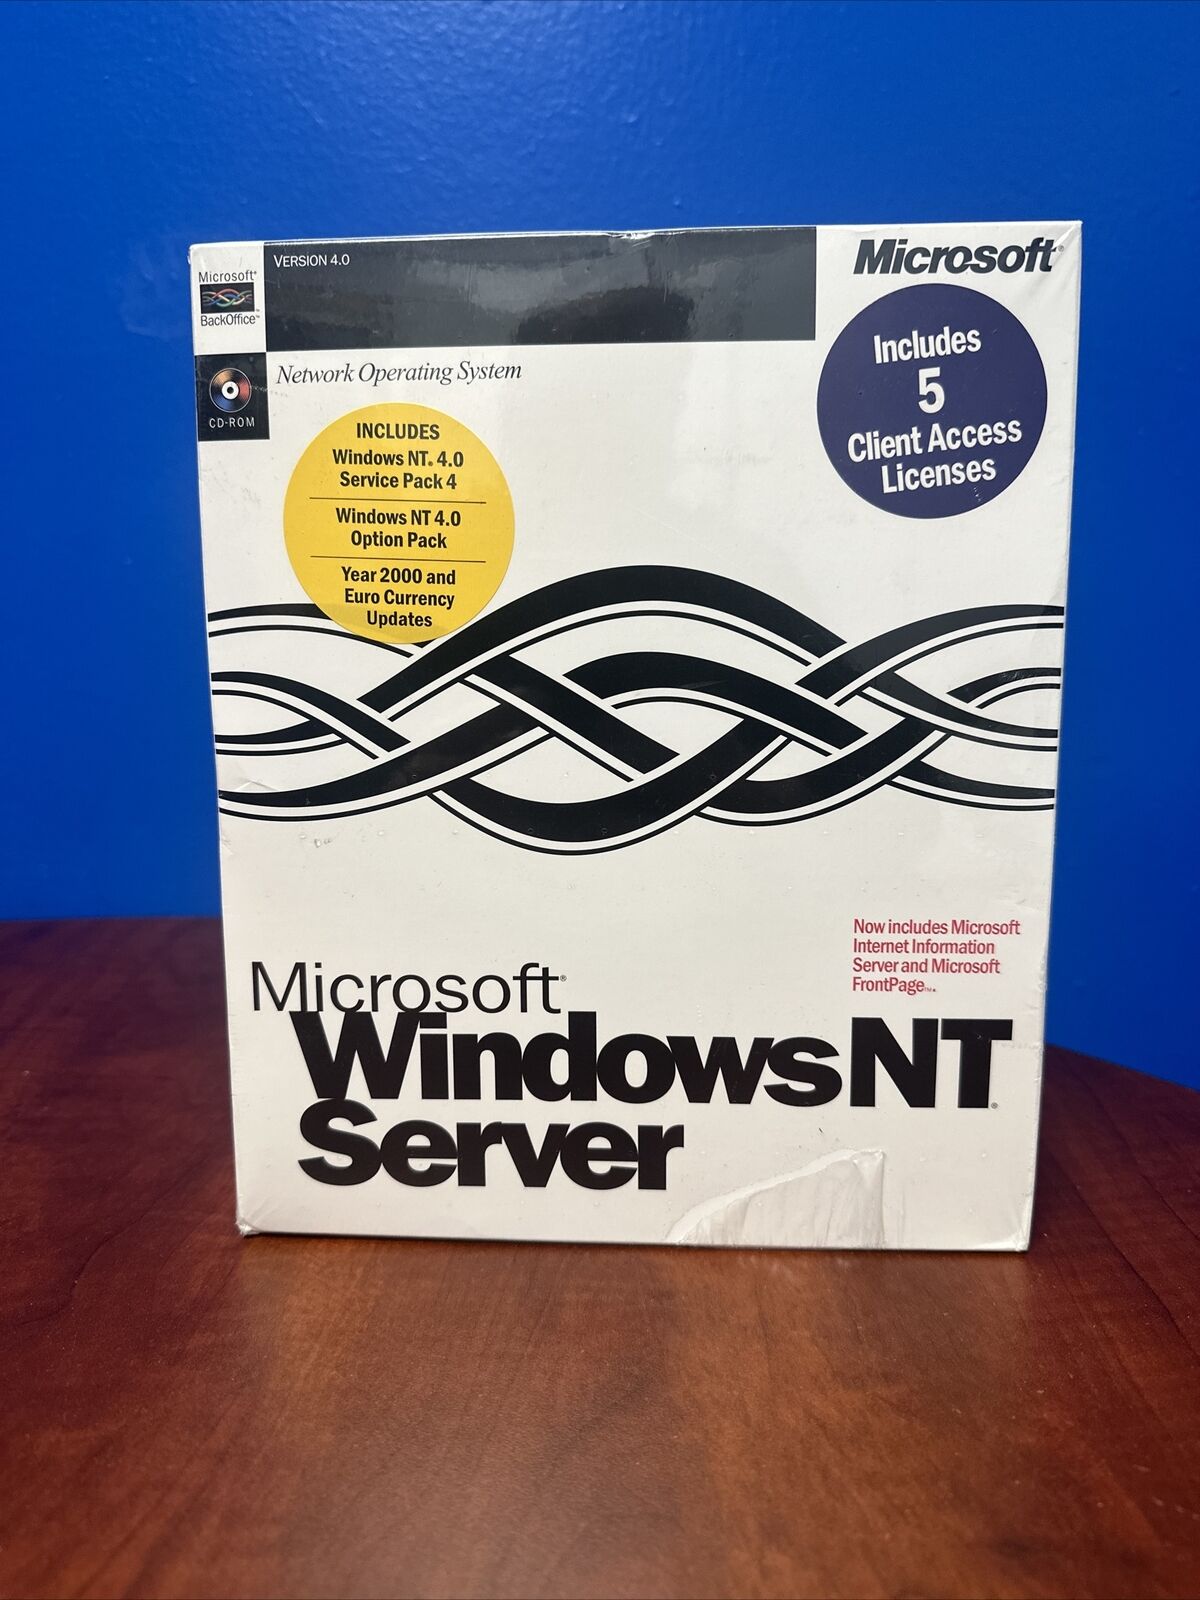 Microsoft Windows NT Server incl 5 Client Access Licenses 0896 Part No. 94336